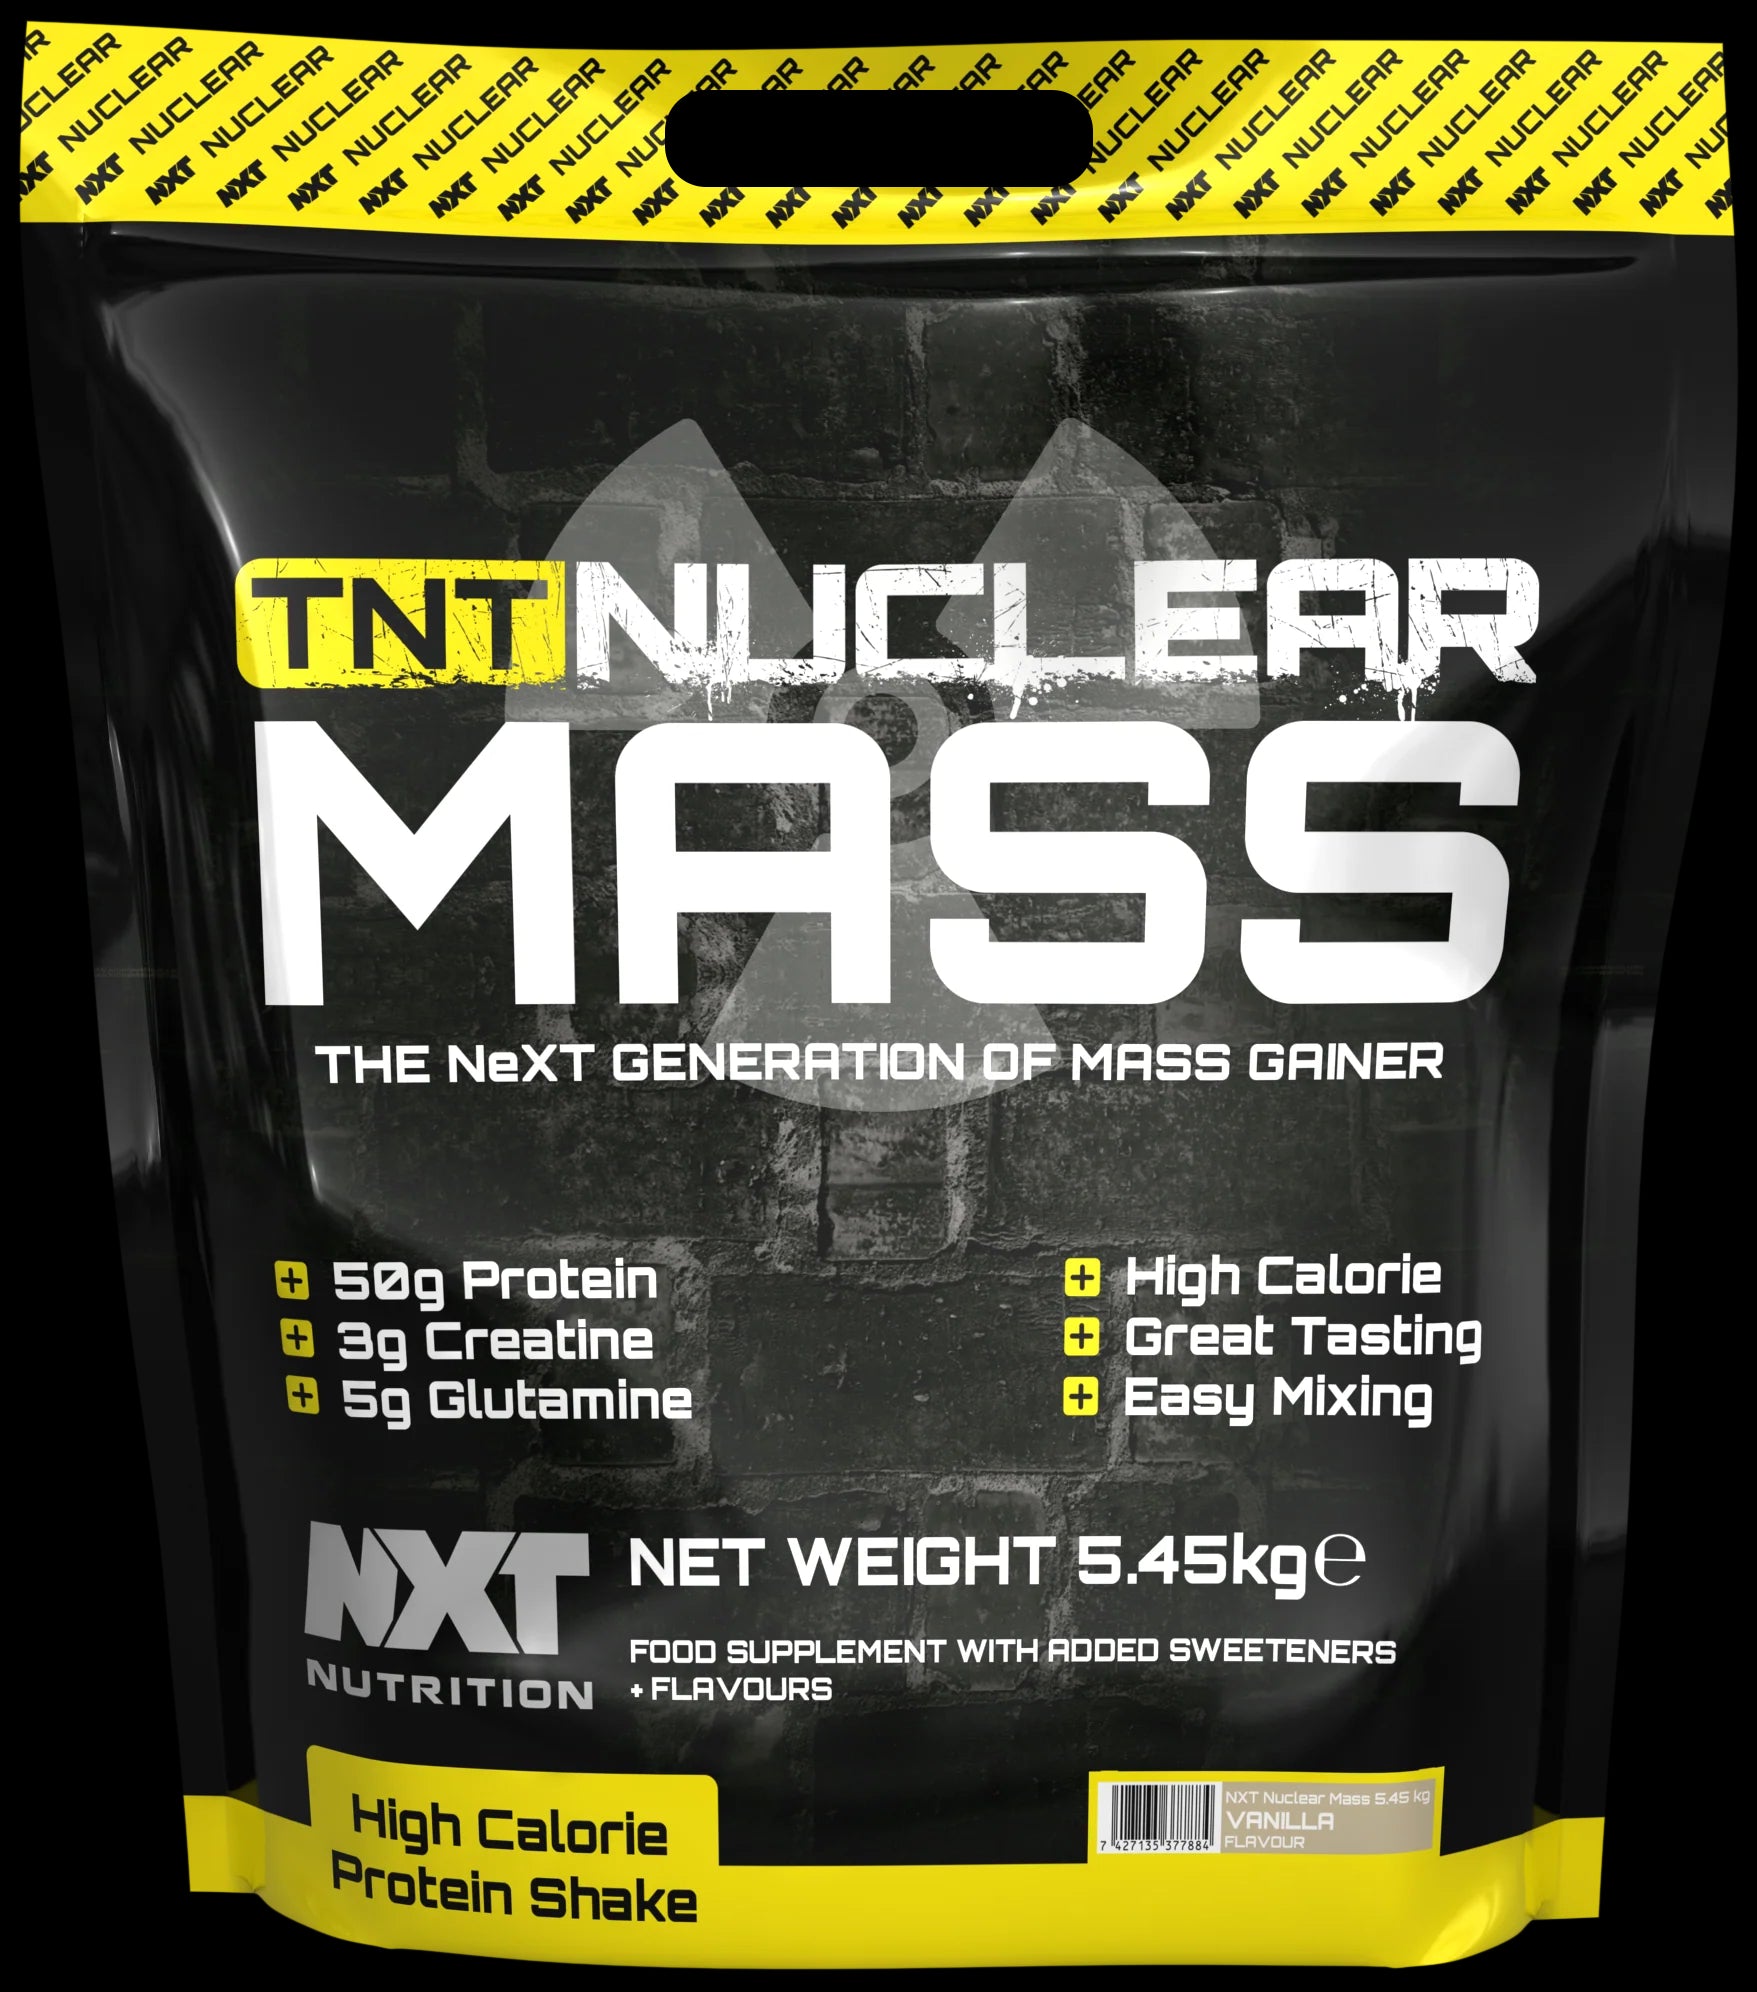 NXT Nutrition TNT Nuclear Mass 5.4kg